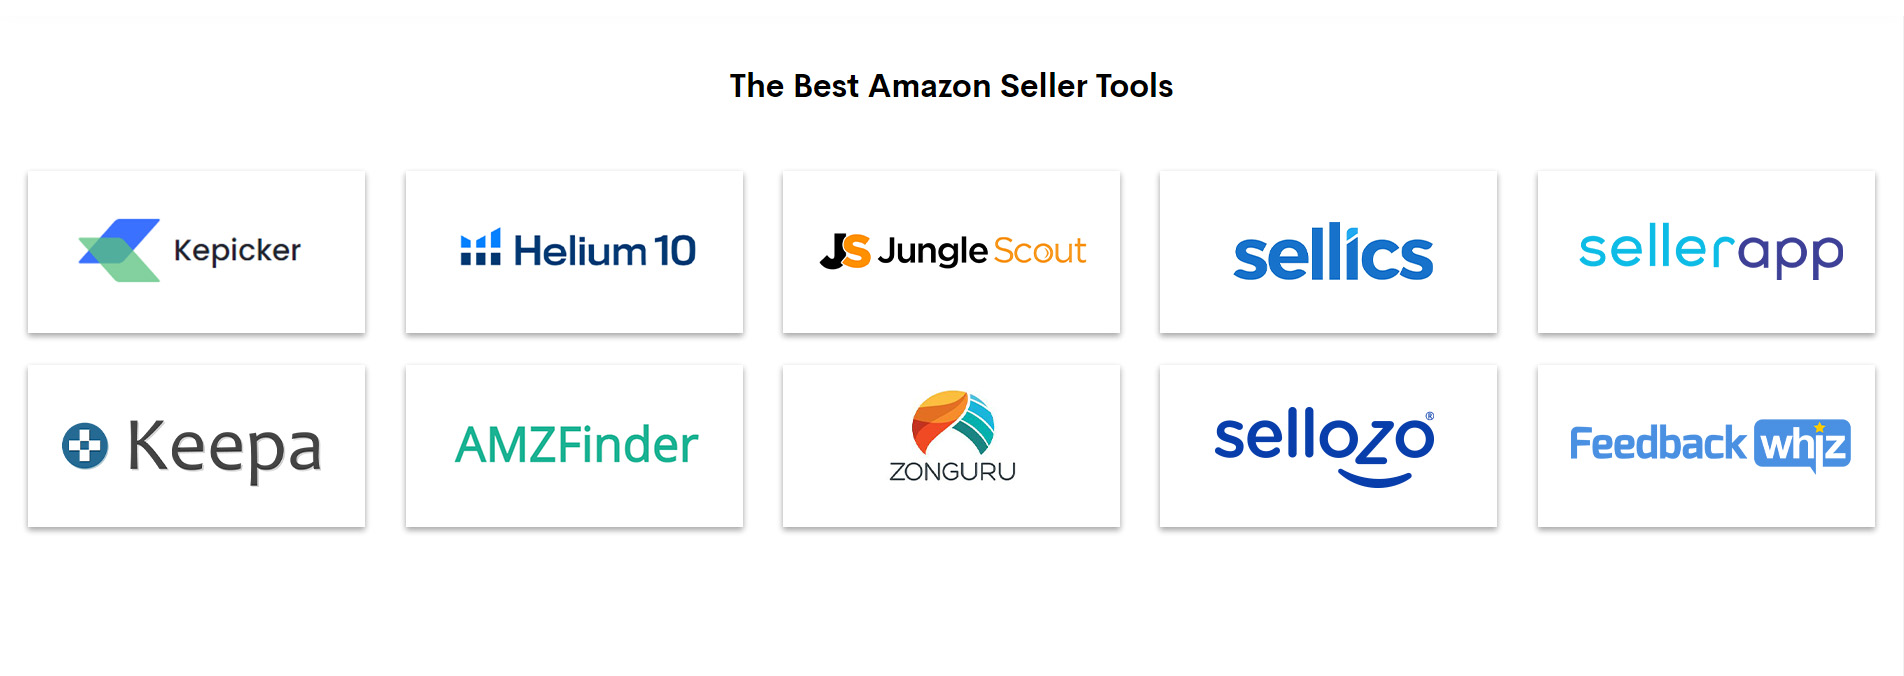 Best Amazon Seller Tools